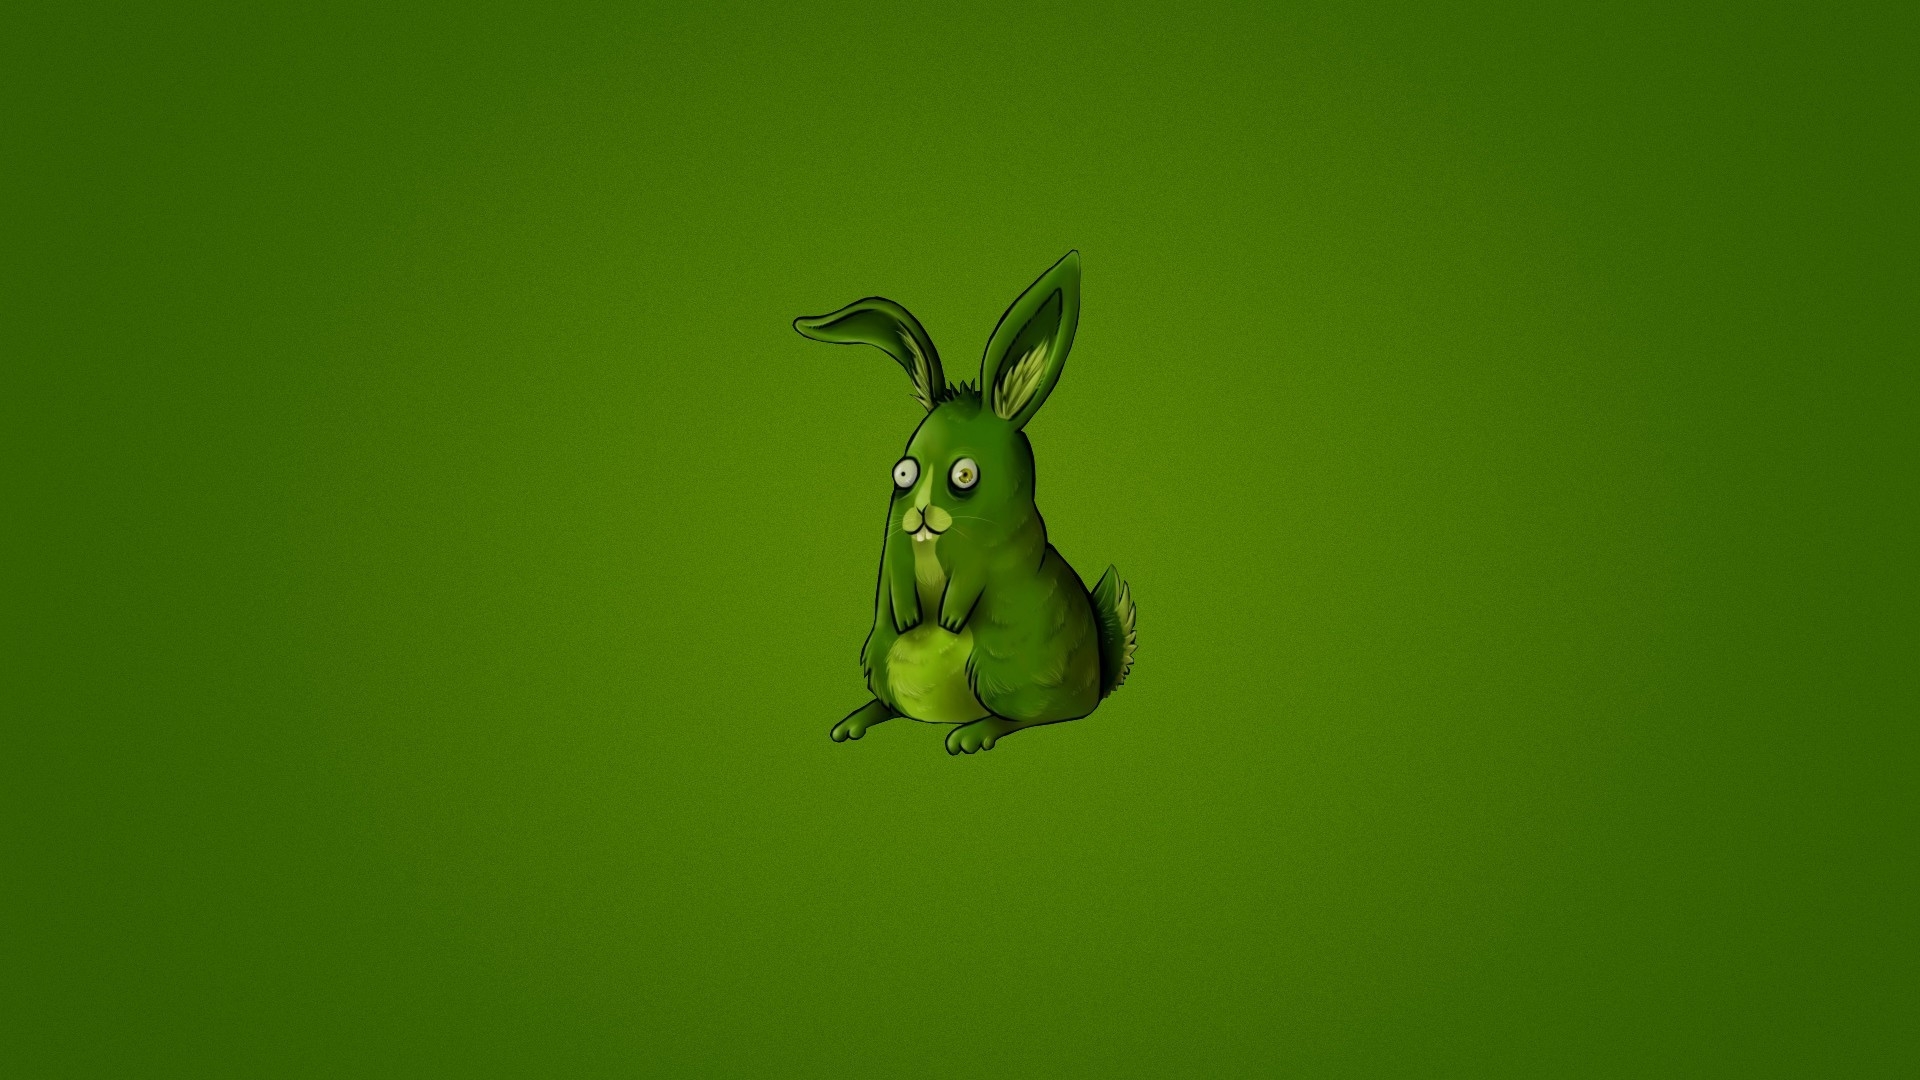 Cute Little Rabbit for 1920 x 1080 HDTV 1080p resolution